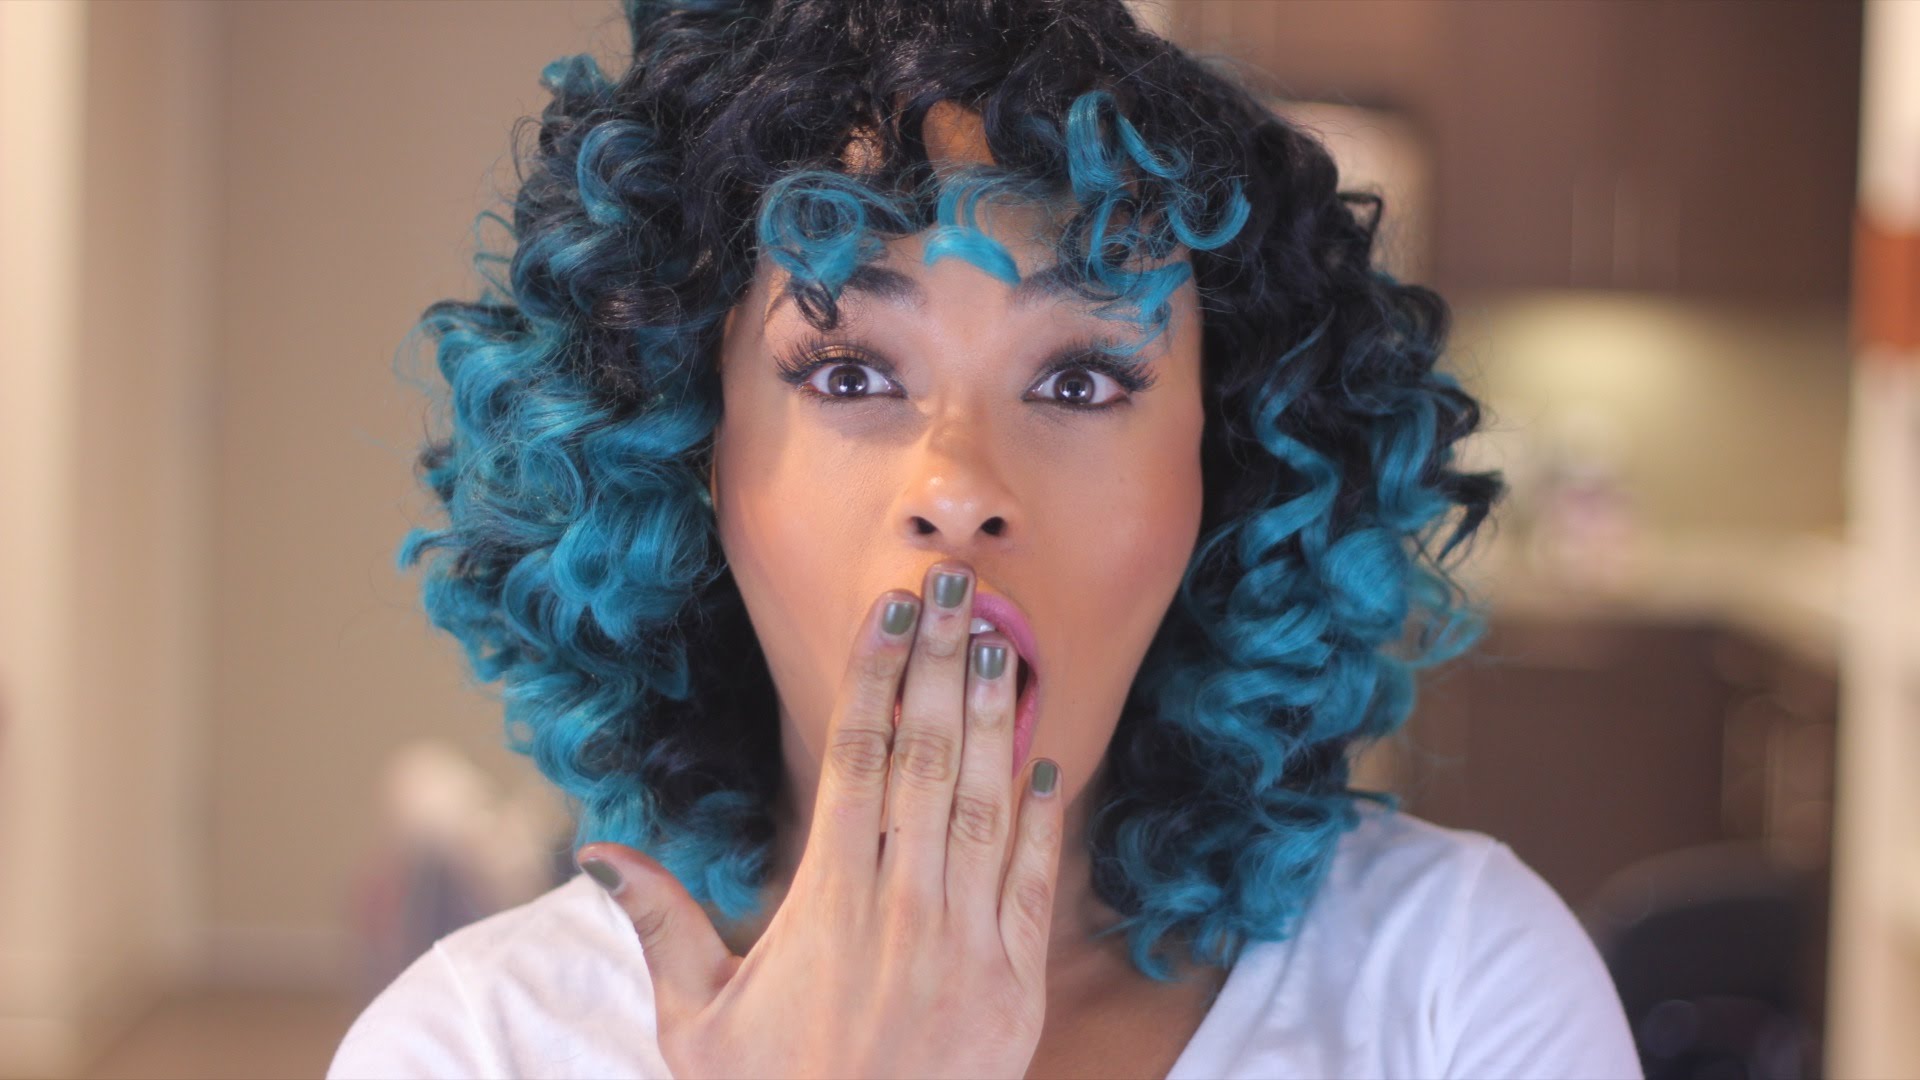 2. "20 Stunning Dark Blue Ombre Hair Ideas" - wide 11